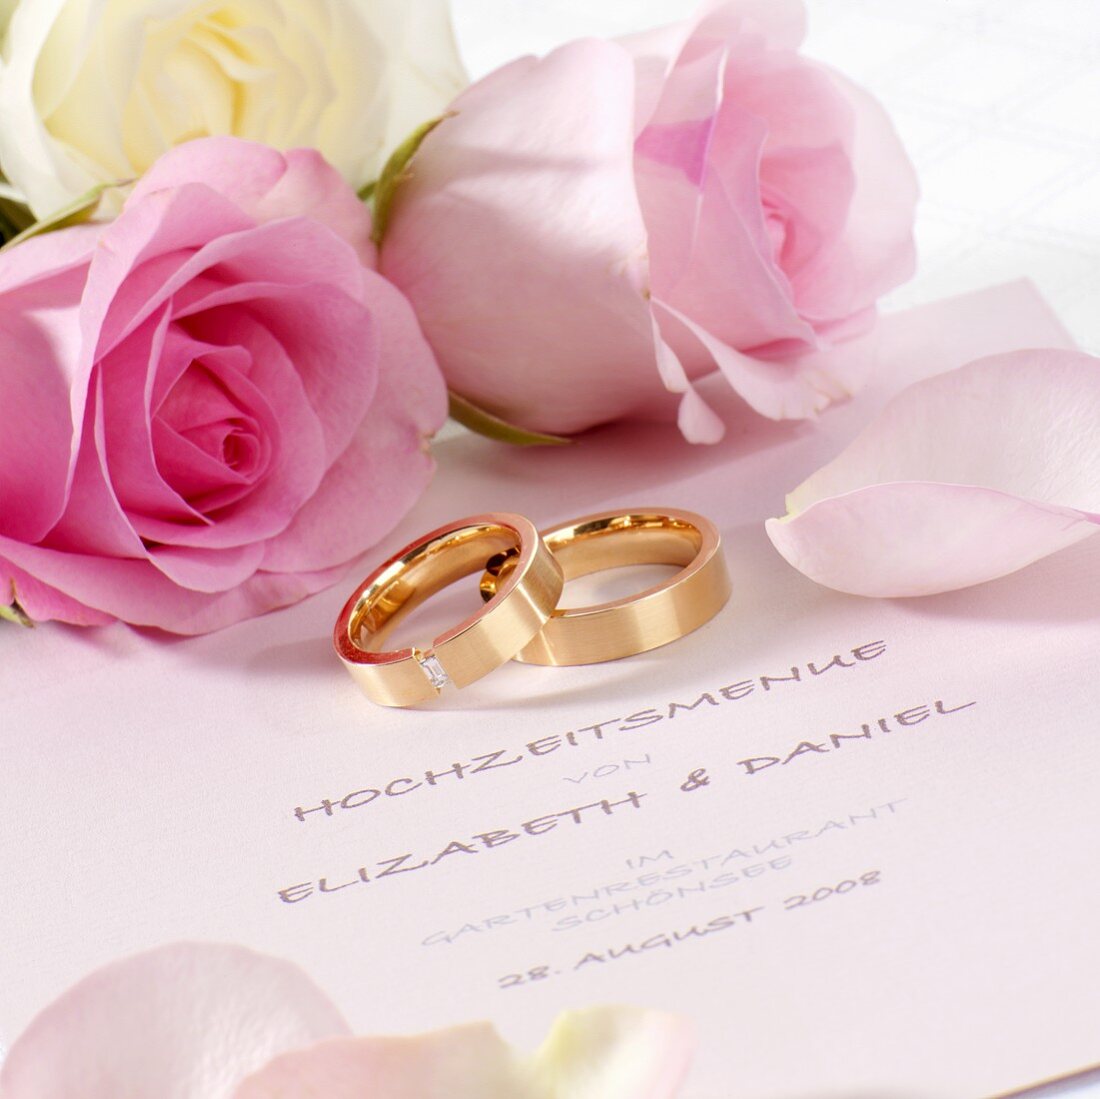 Wedding menu, wedding rings and pink roses